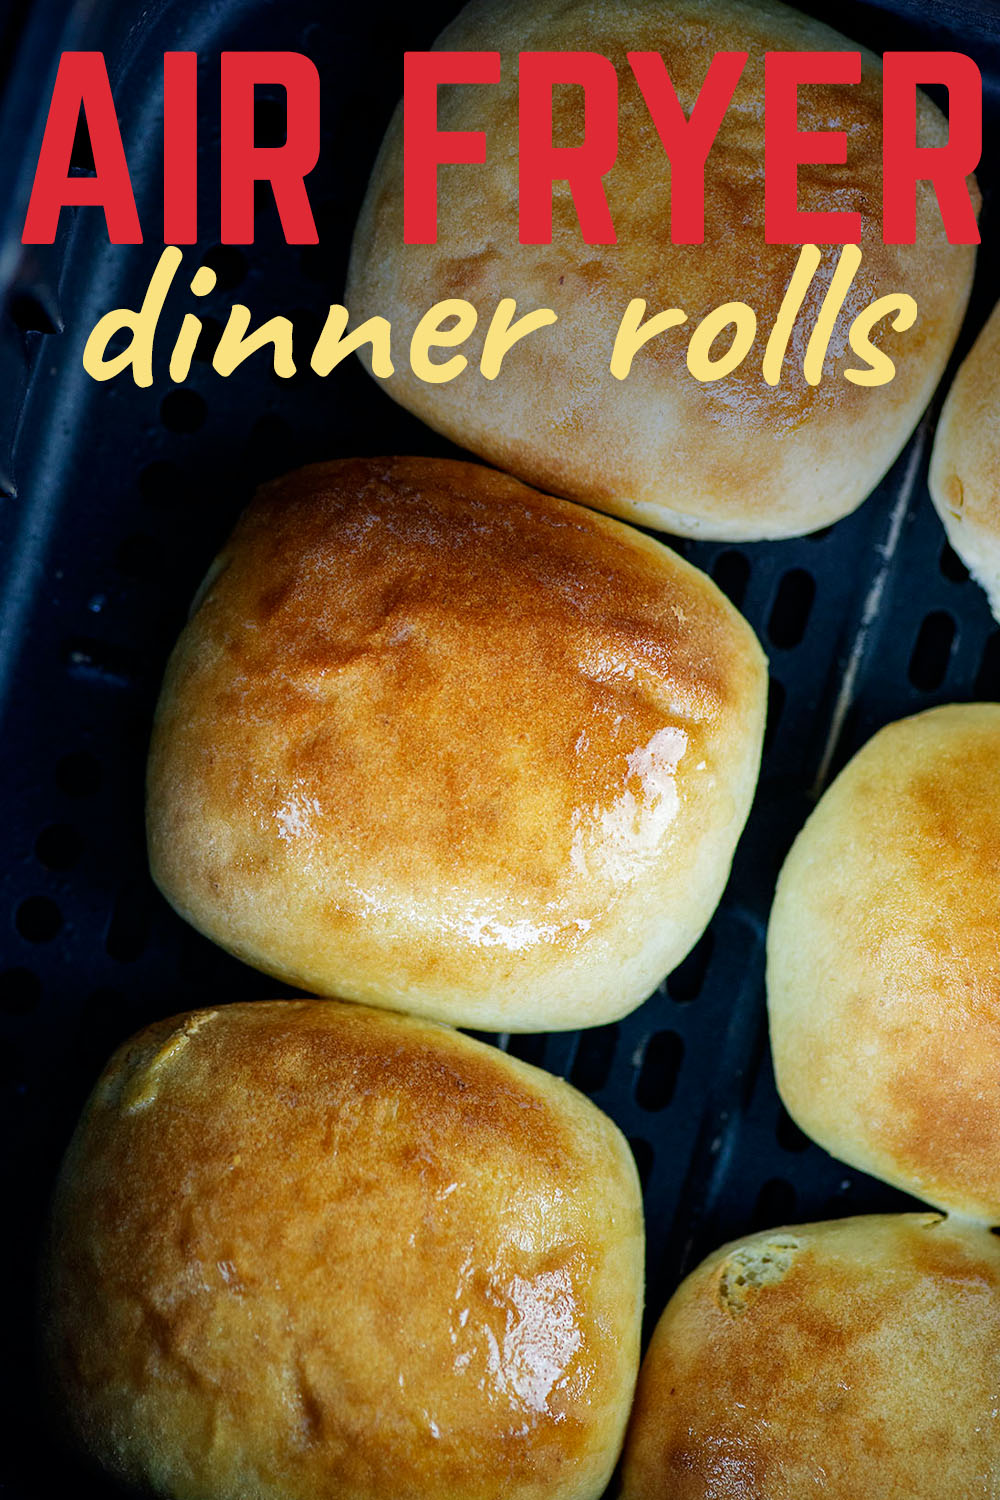 Overhead view of dinner rolls in an air fryer.